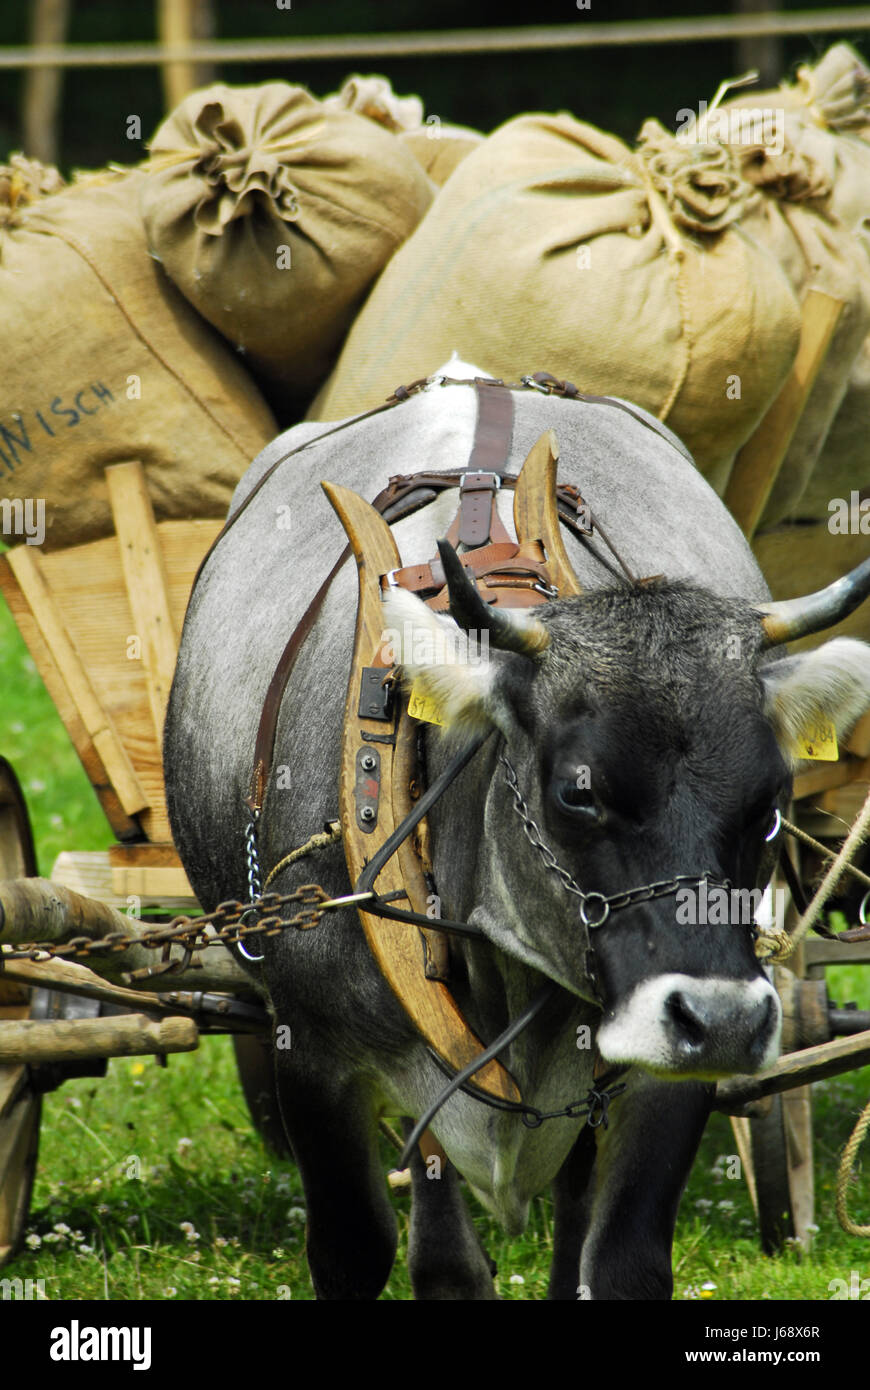 Taschen Bullock Warenkorb Bull Landwirtschaft Landwirtschaft Nostalgie Kette Kabelbaum transport Stockfoto